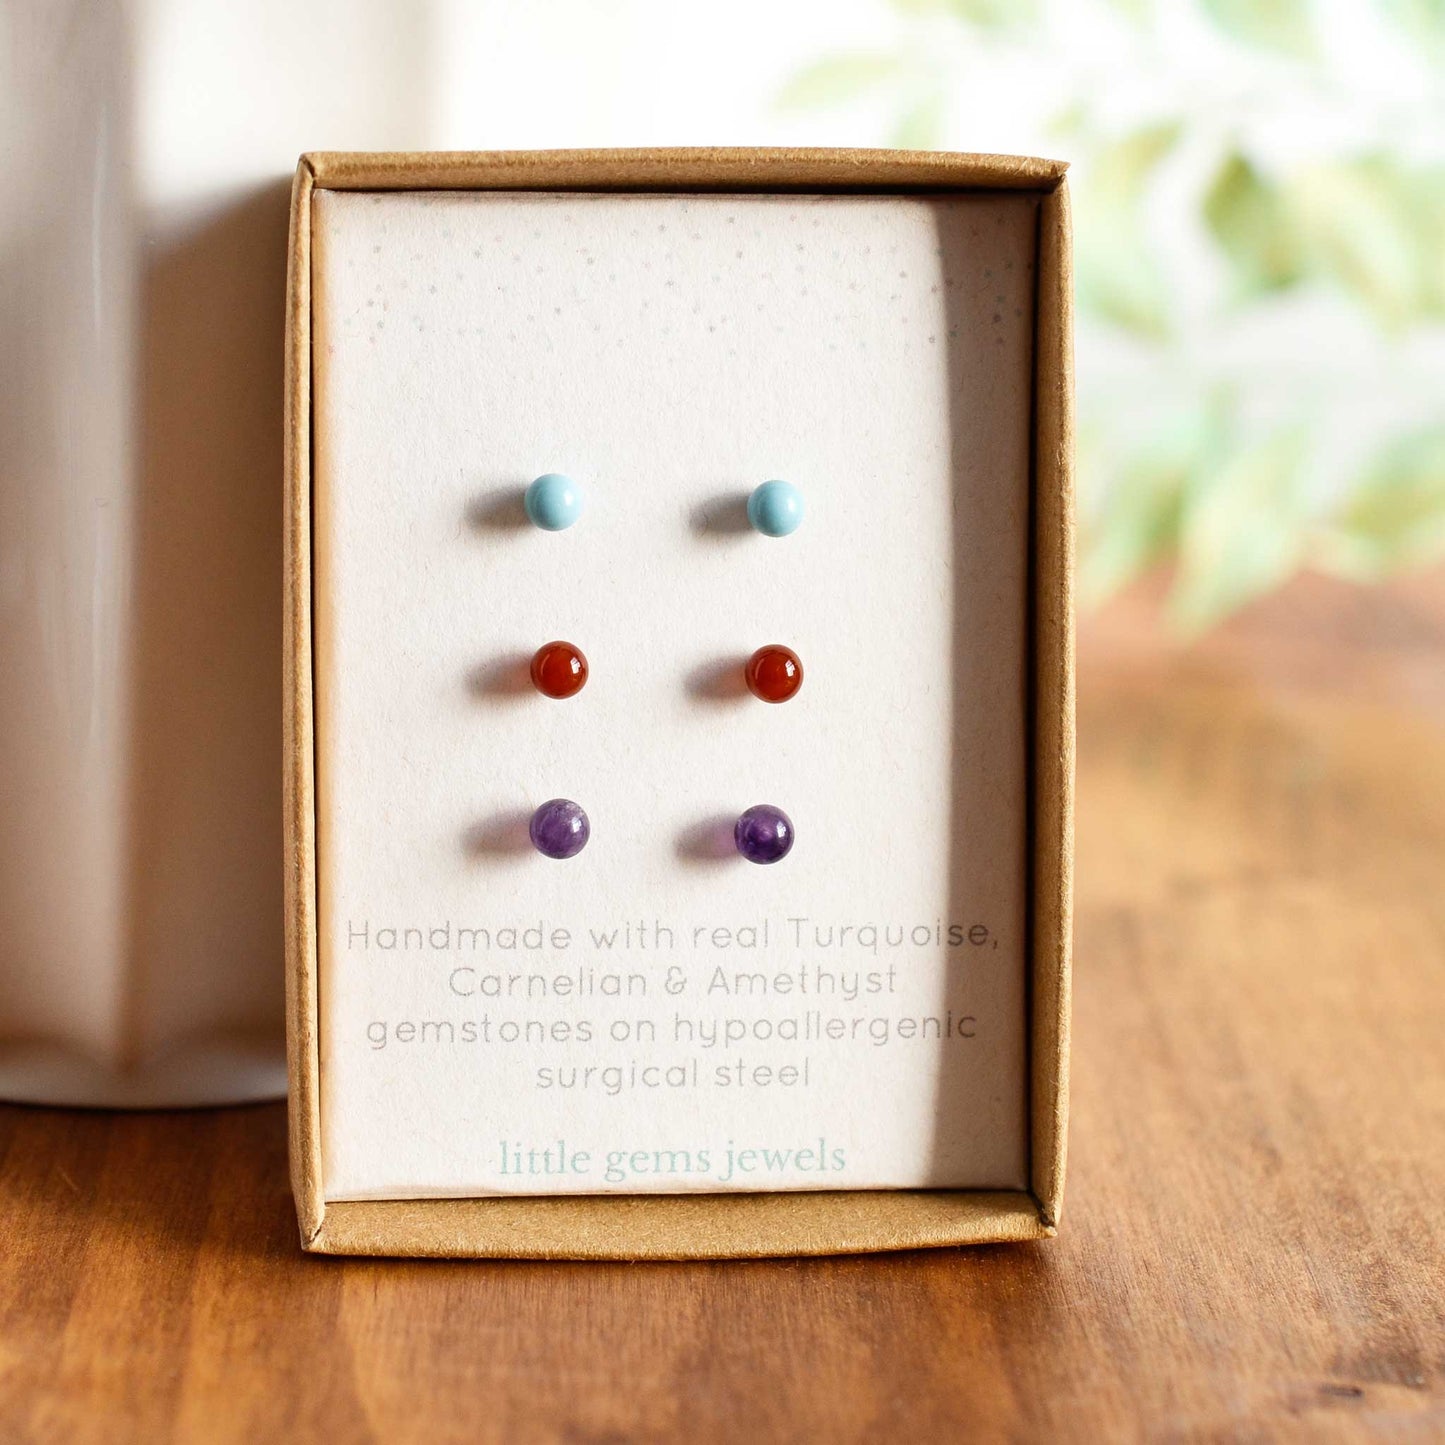 Turquoise, Carnelian & Amethyst gemstone stud earring set in eco friendly gift box